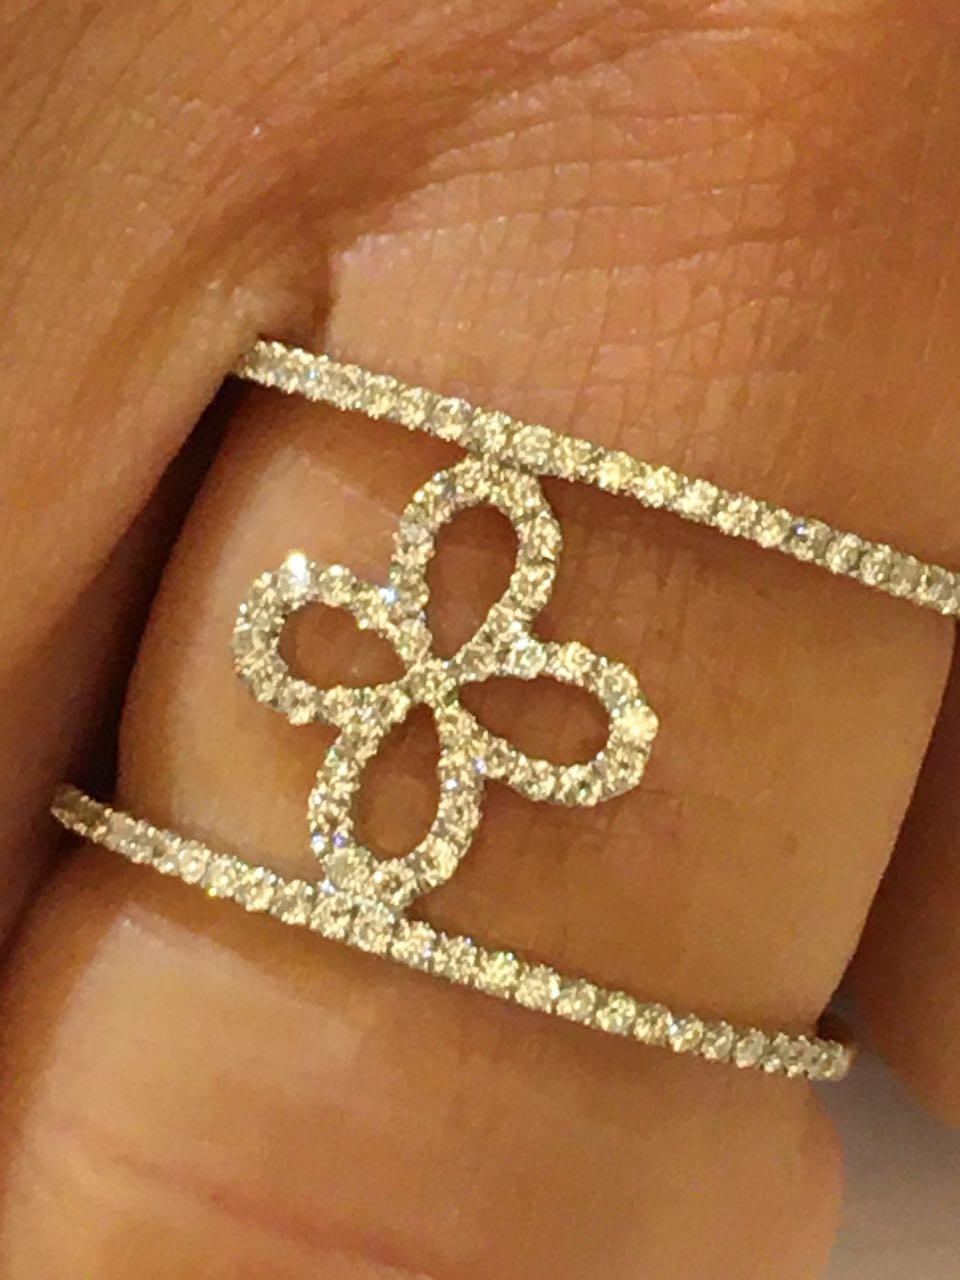 AVATAR, anillo de oro blanco con diamantes - Roman Joyero